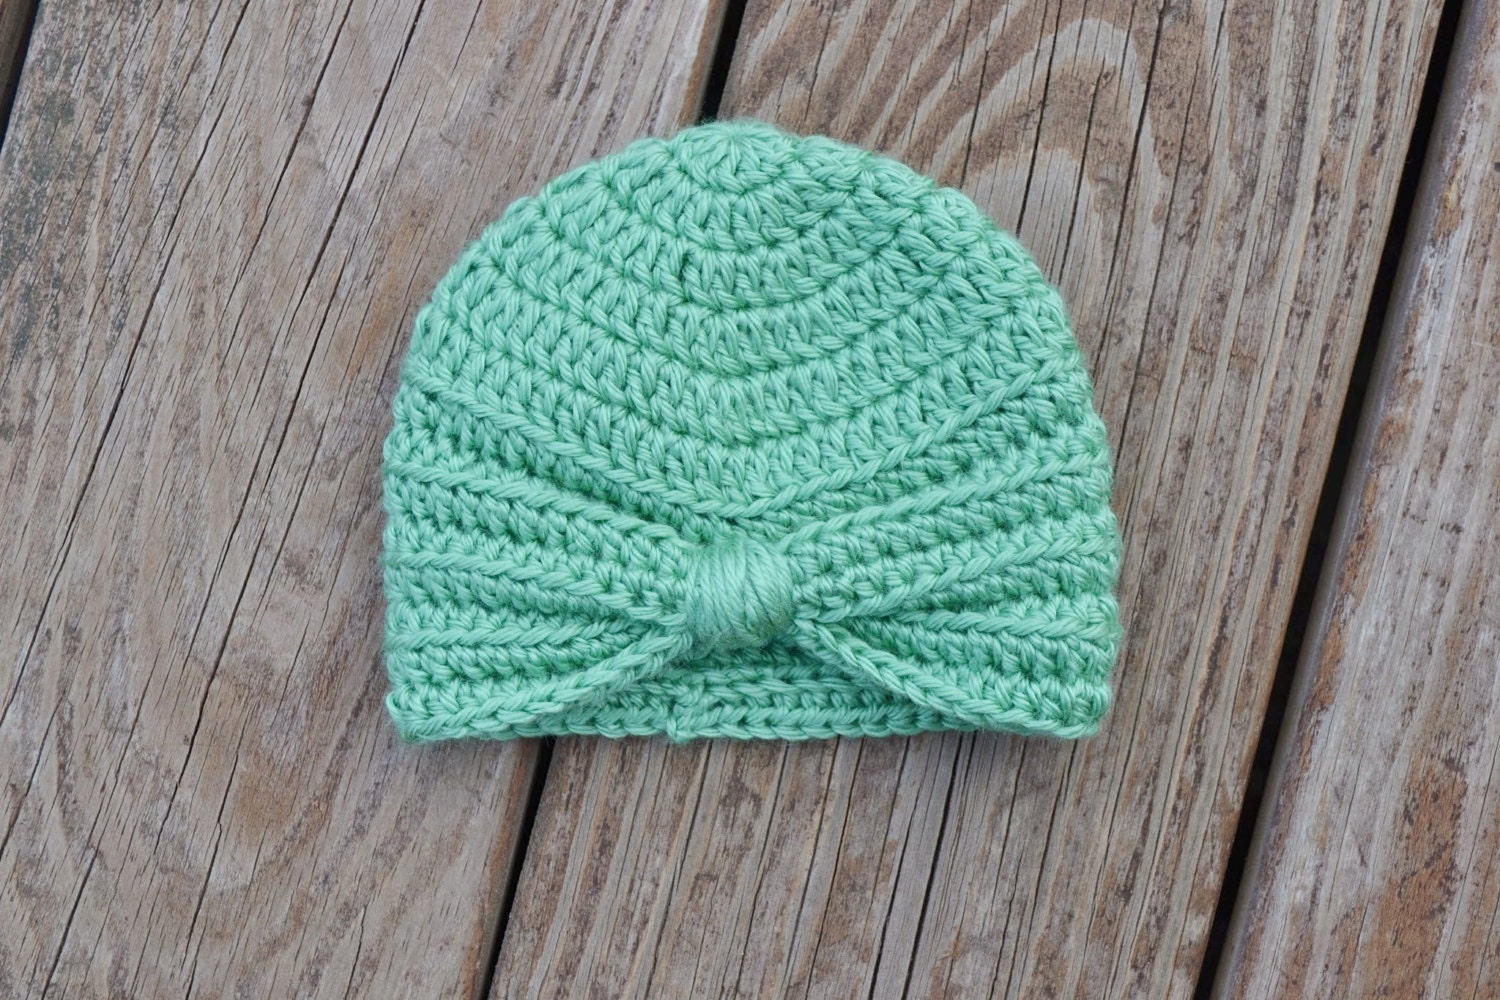 Crochet Baby Turban Hat in MINT Turban Baby Hat Newborn